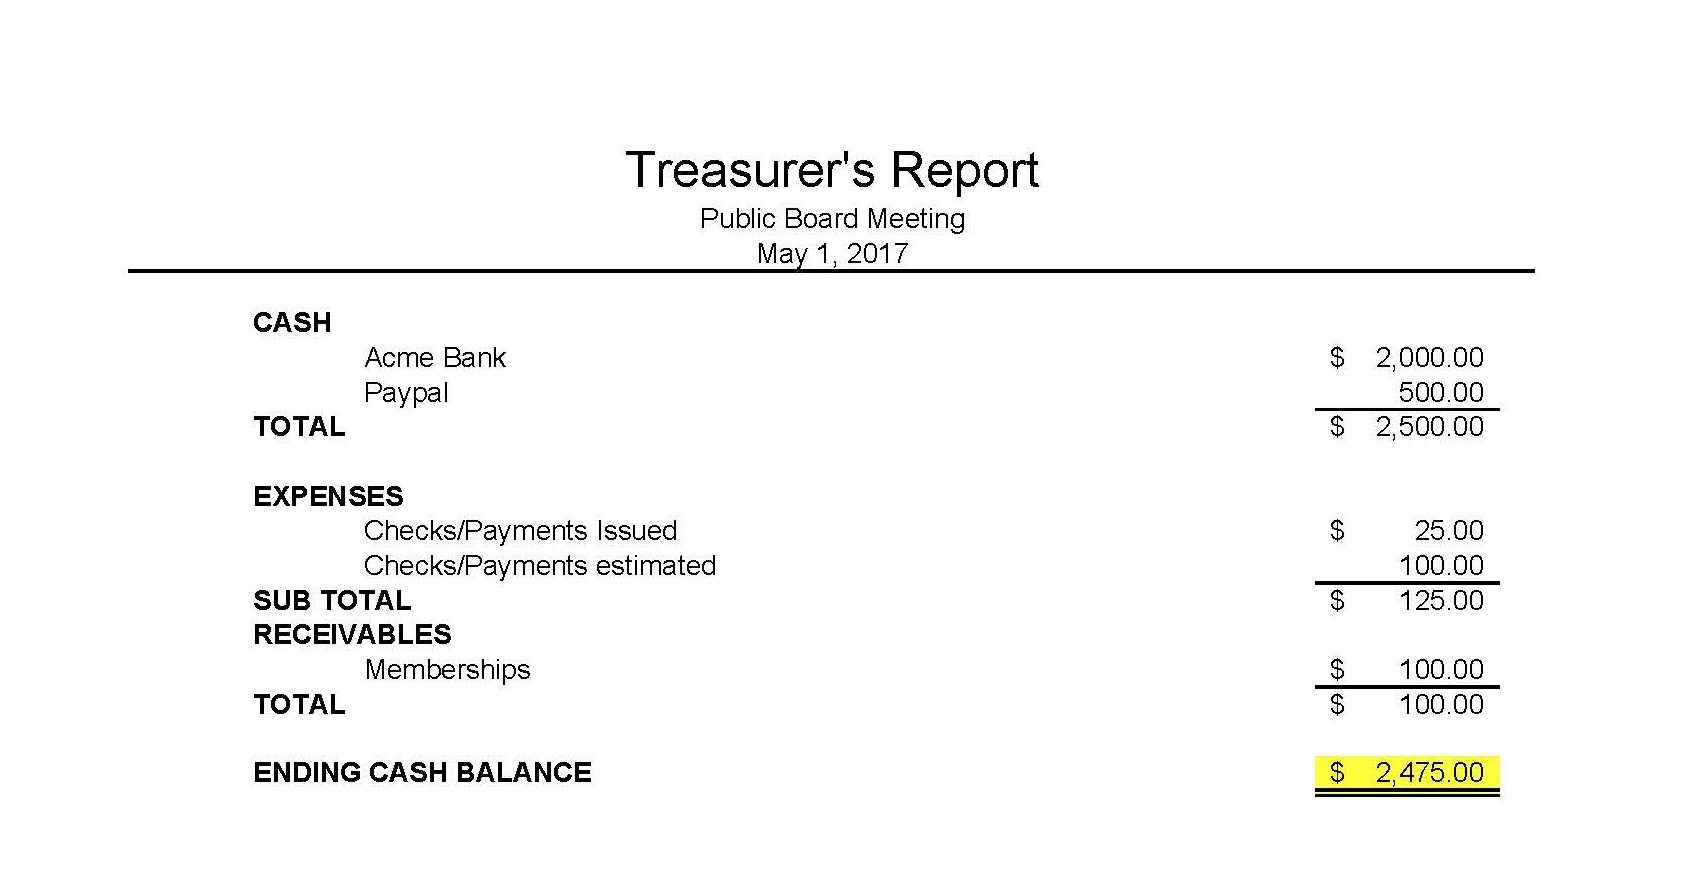 009 Treasurer Report Template Non Profit Sample Club Throughout Treasurer Report Template